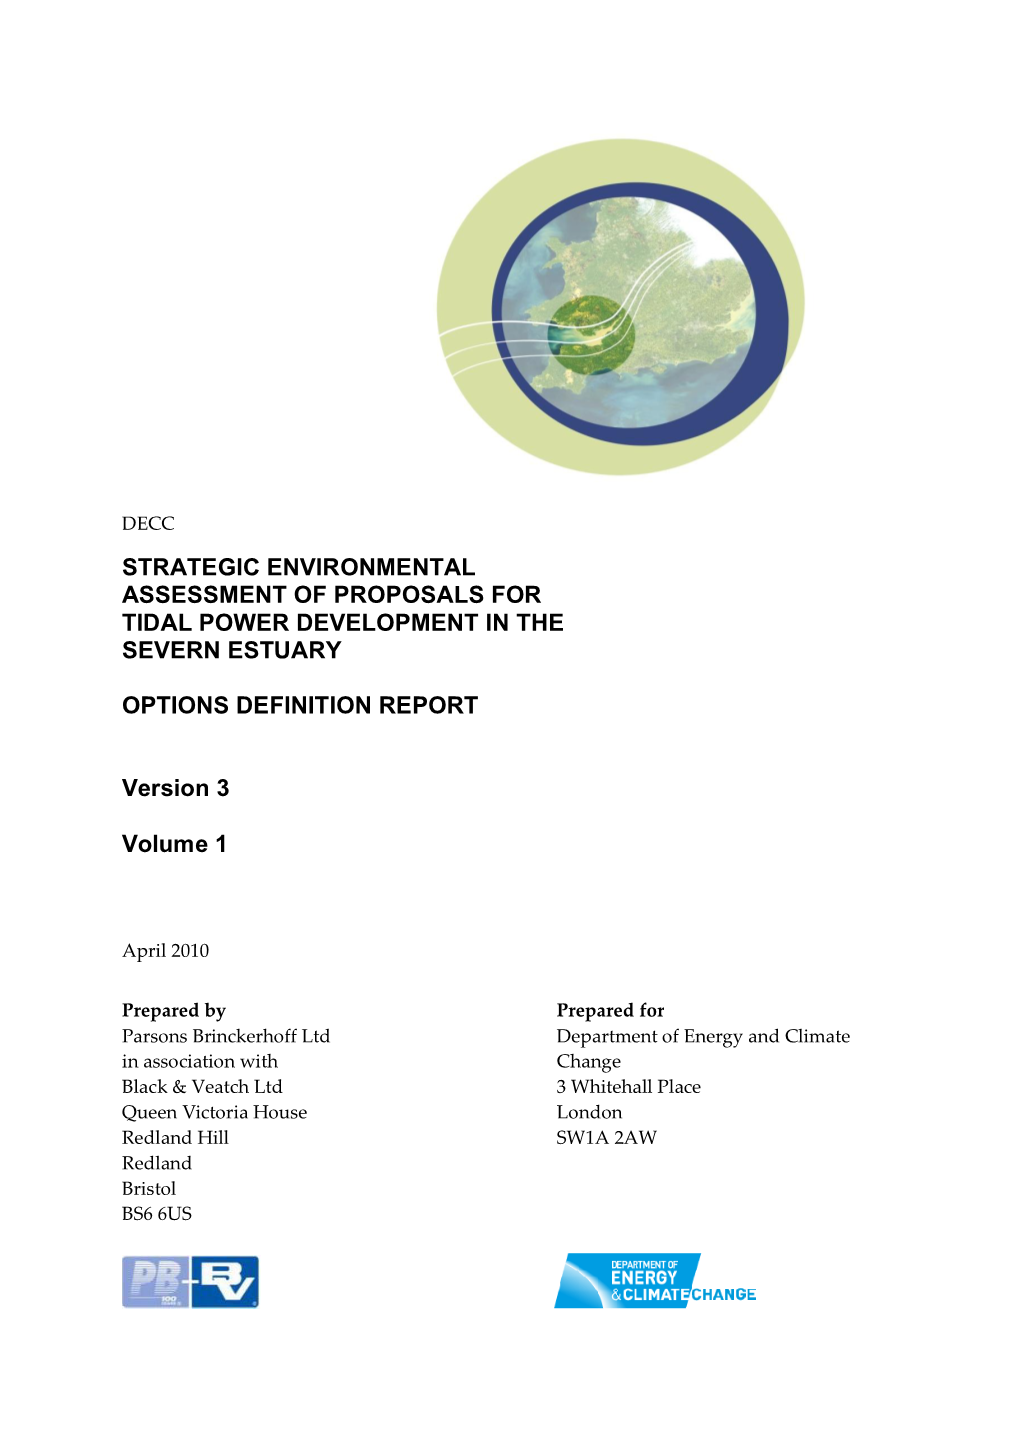 Strategic Environmental Assessment of Proposals for Tidal Power Development in the Severn Estuary